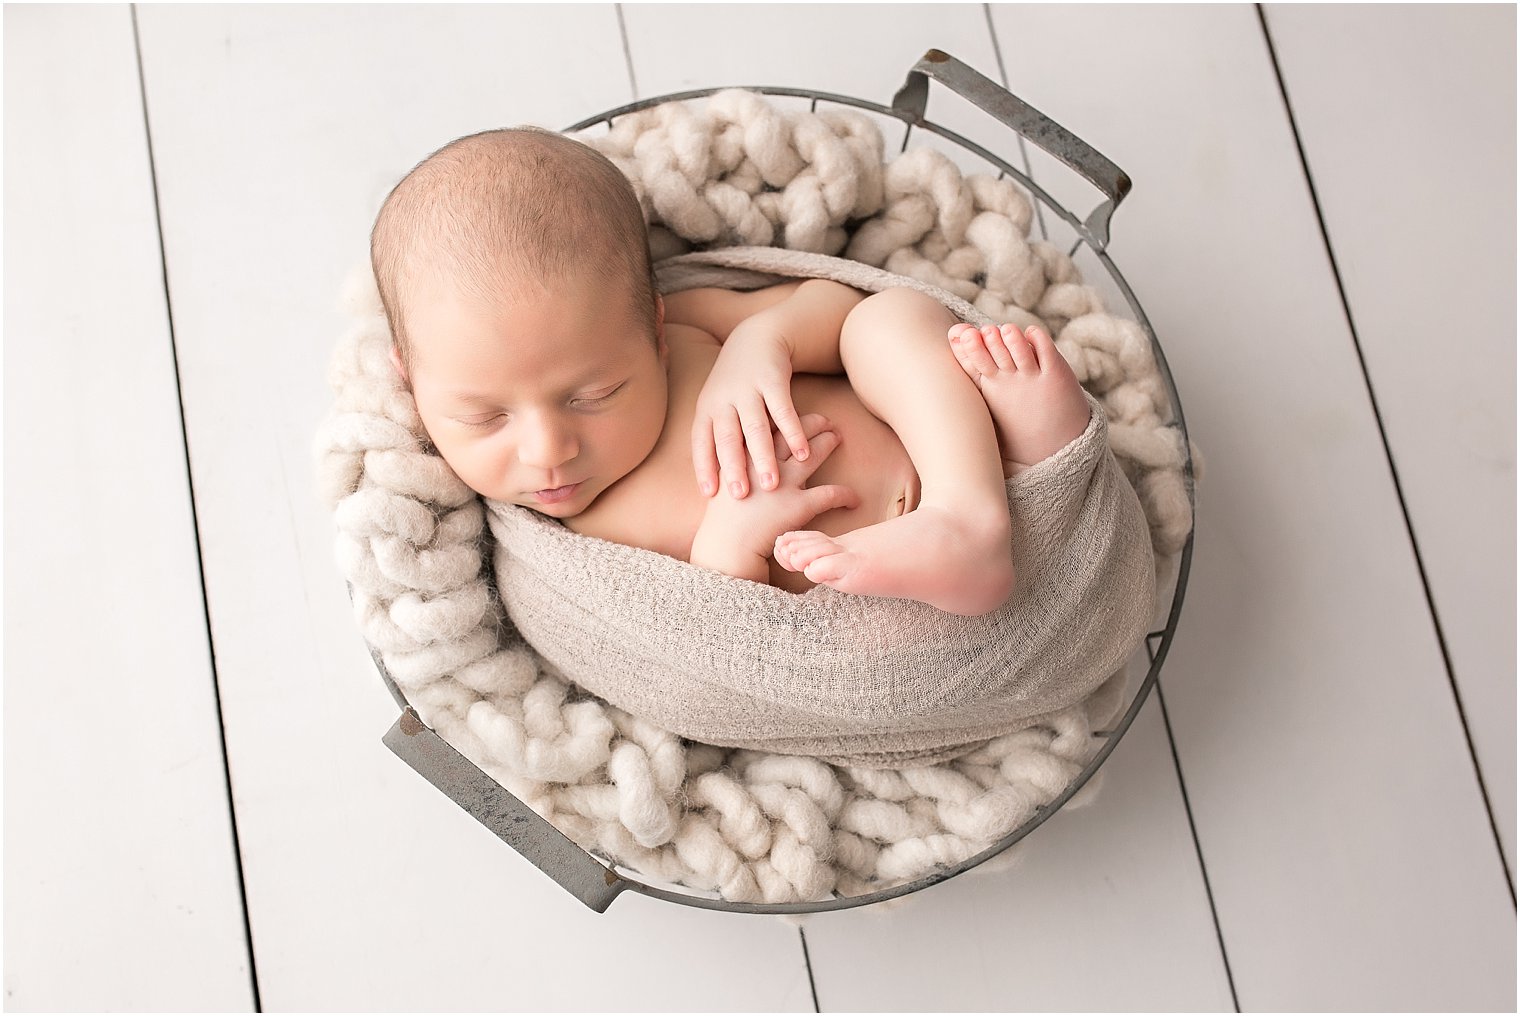 Newborn boy in a basket pose